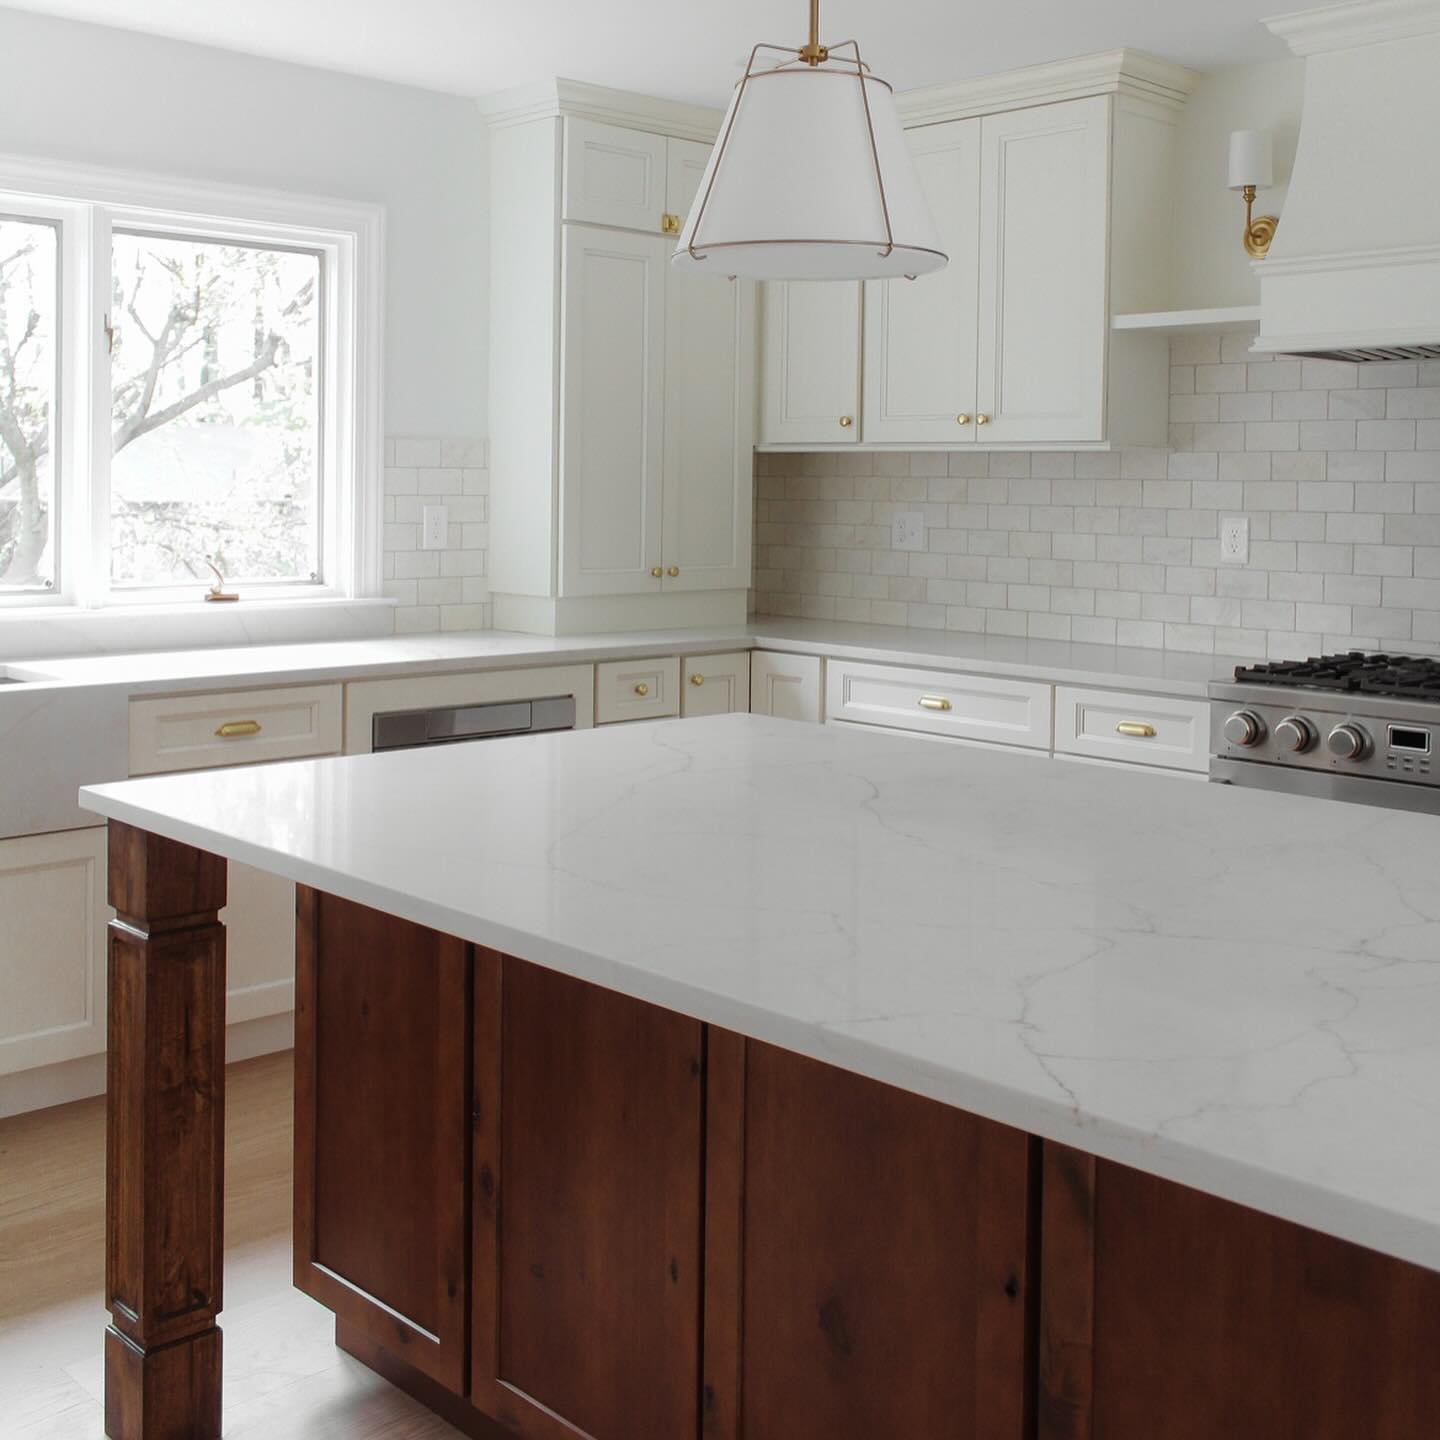 Cream + wood for a classic/rustic kitchen vibe ❤

Design: @intuitive.design_ 
🛠️: @greateastern_contracting 
📸: @megleonardcodesign 

Annapolis interior design. Kitchen design. #intudesign